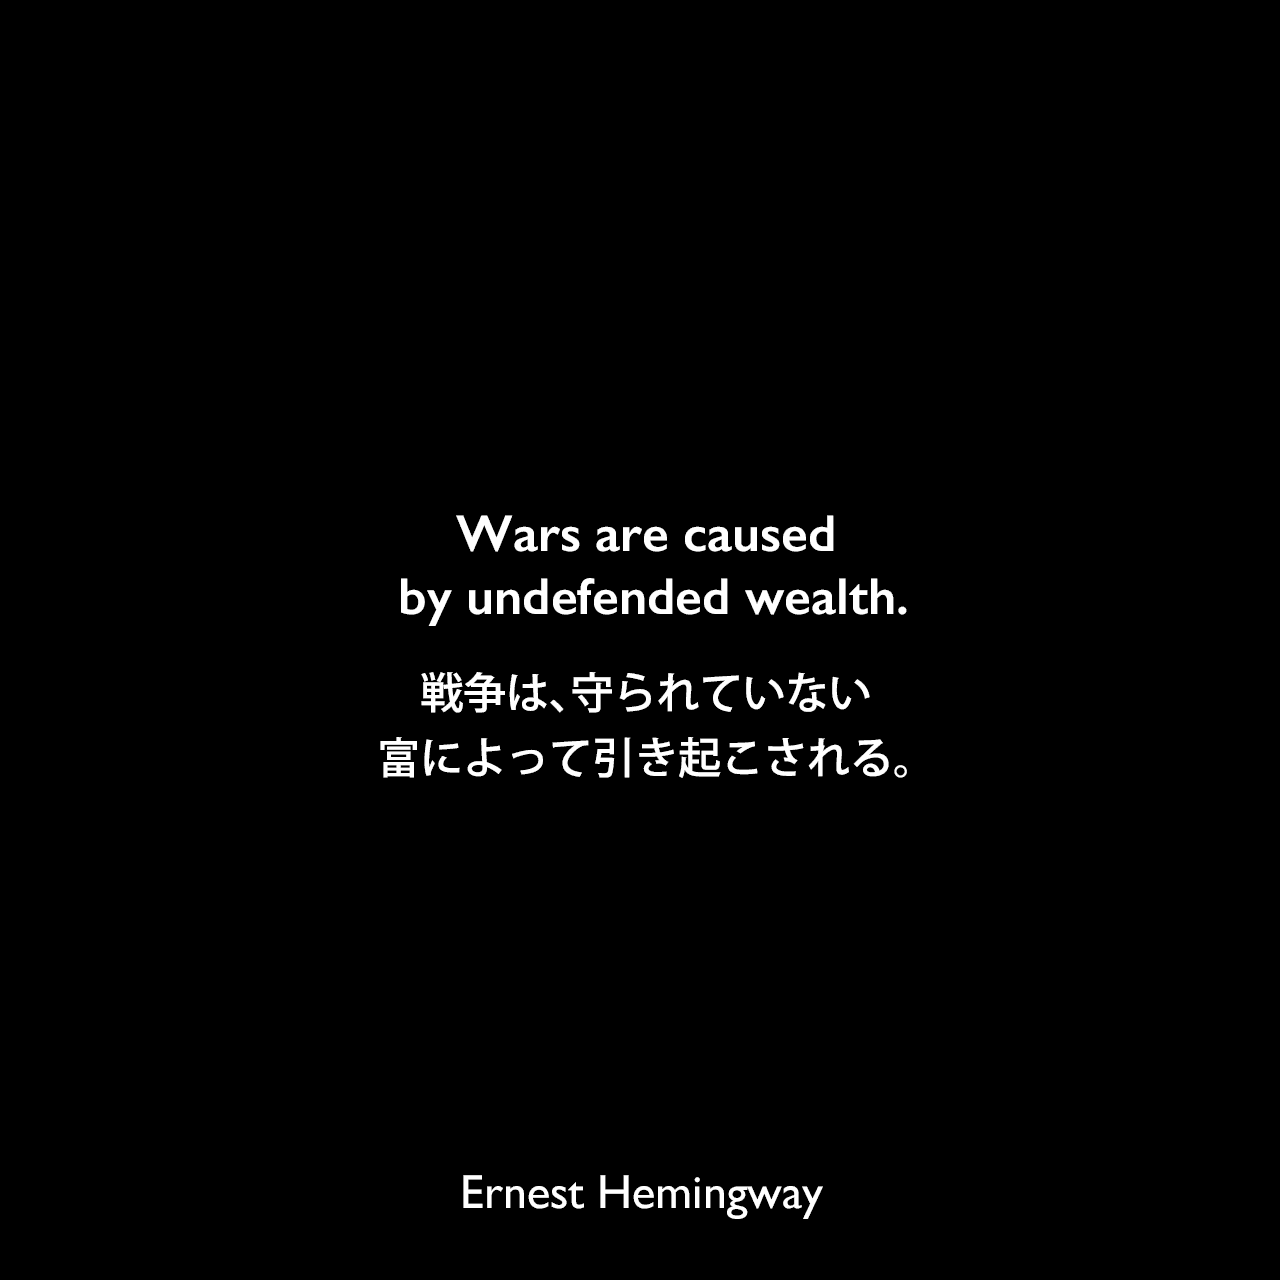 Wars are caused by undefended wealth.戦争は、守られていない富によって引き起こされる。Ernest Hemingway